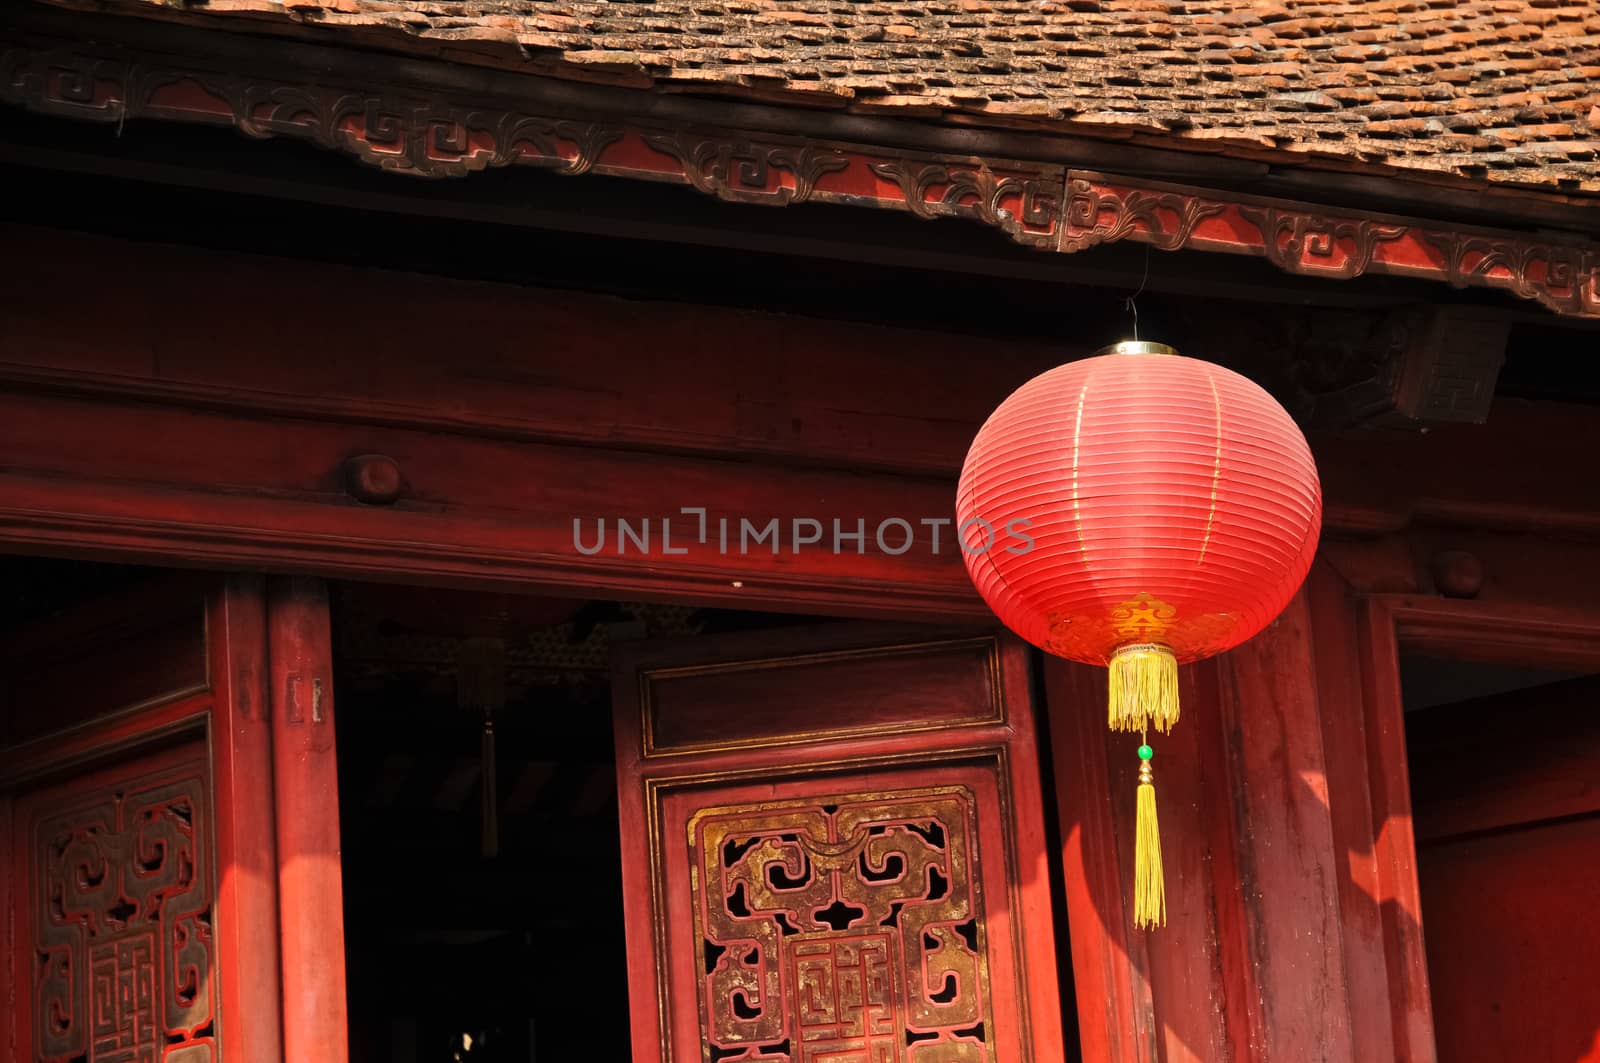 Classical red paper Chinese lantern in sacred shrine in Hanoi Vietnam